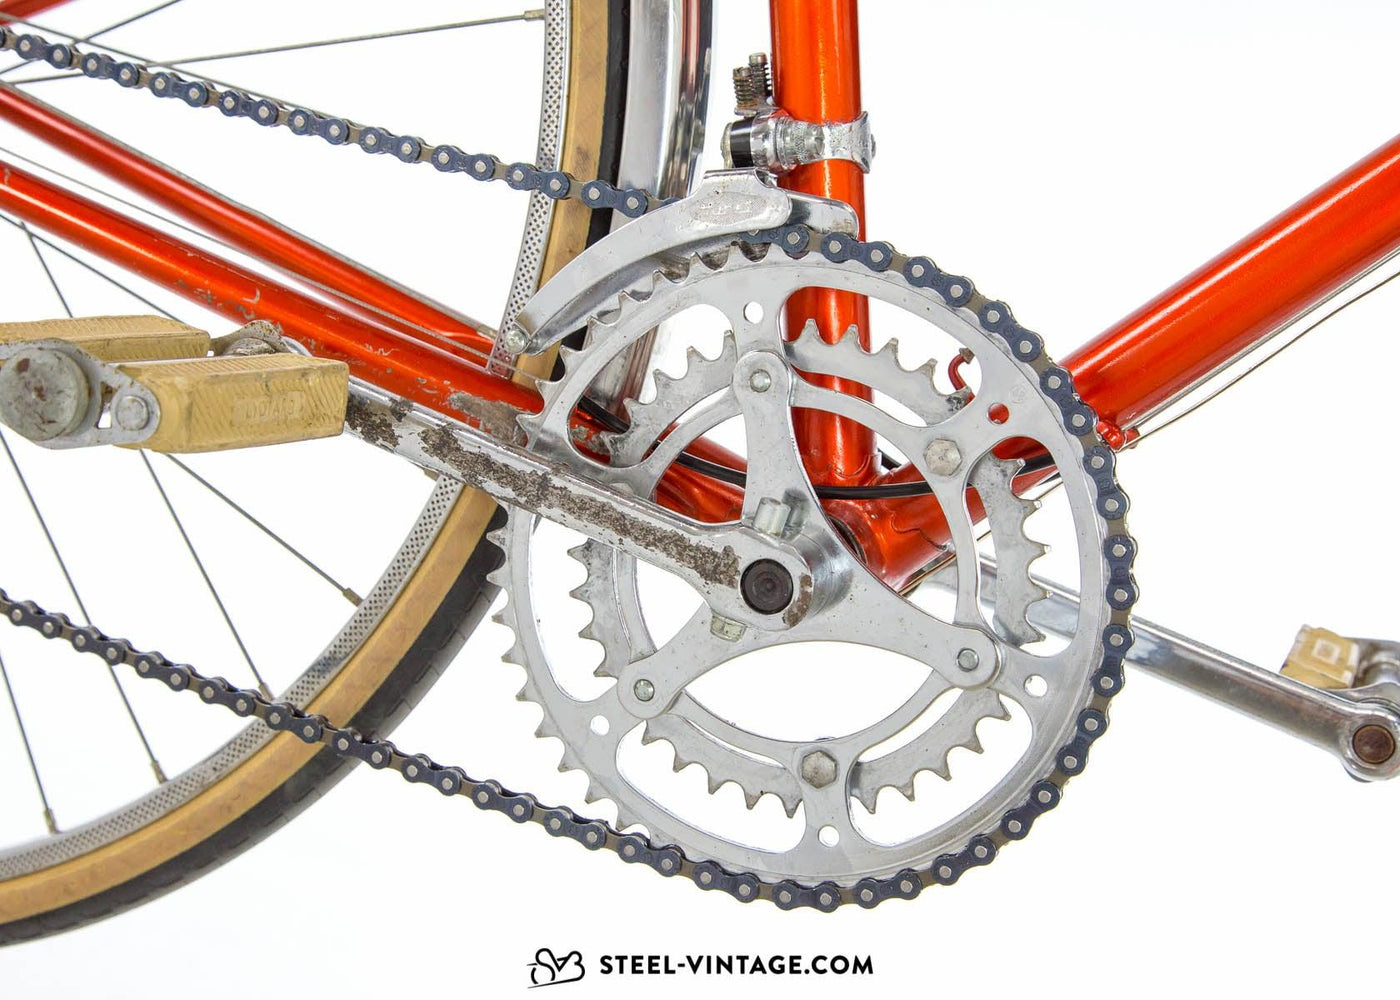 Gitane Evry Classic Mixte Orange Bike 1970s - Steel Vintage Bikes